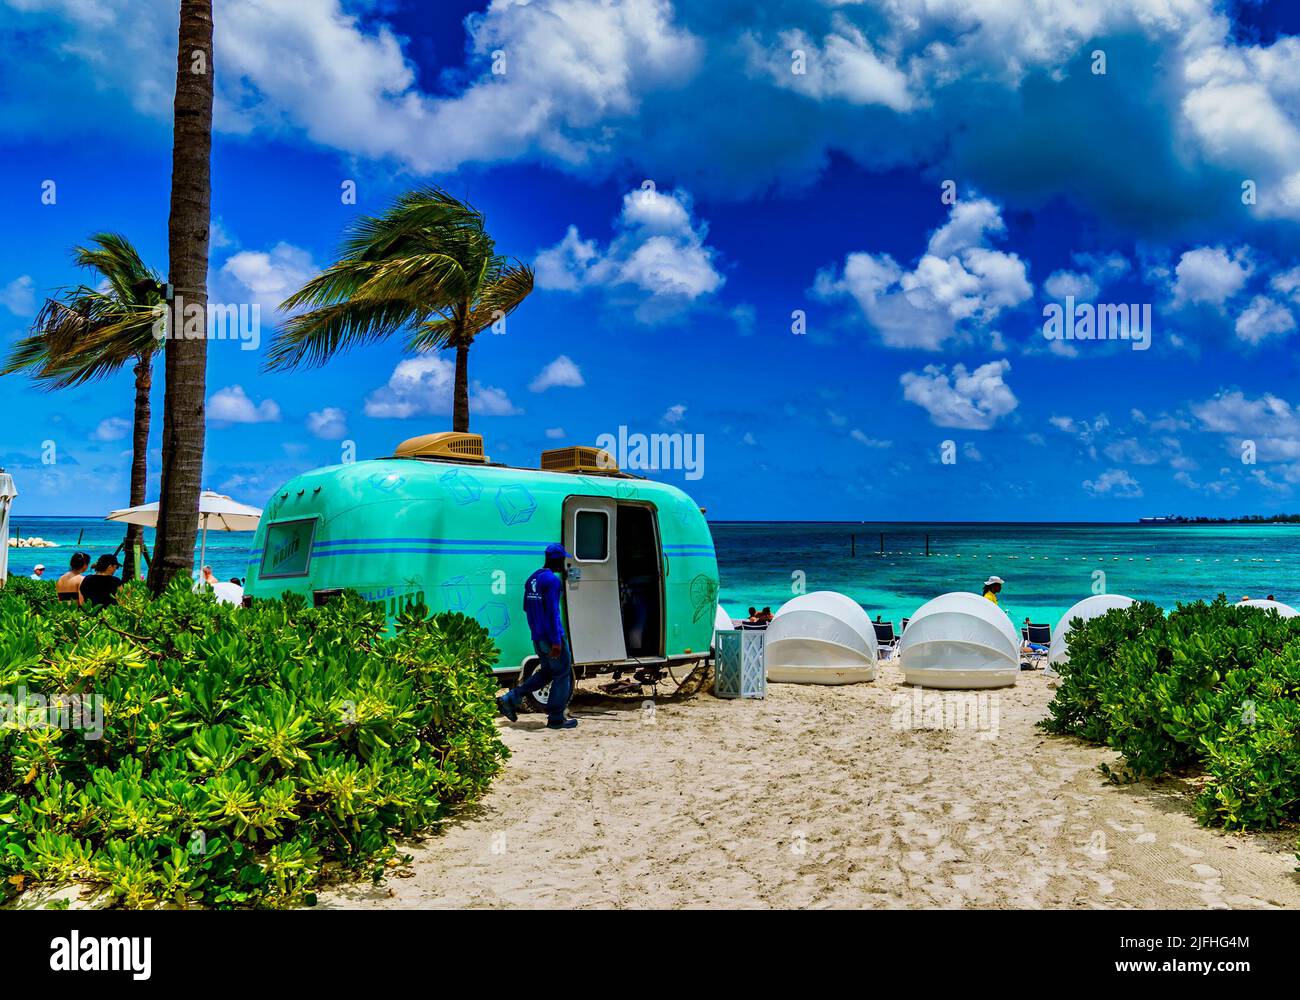 Food vending truck on a tropical beach Stock Photo